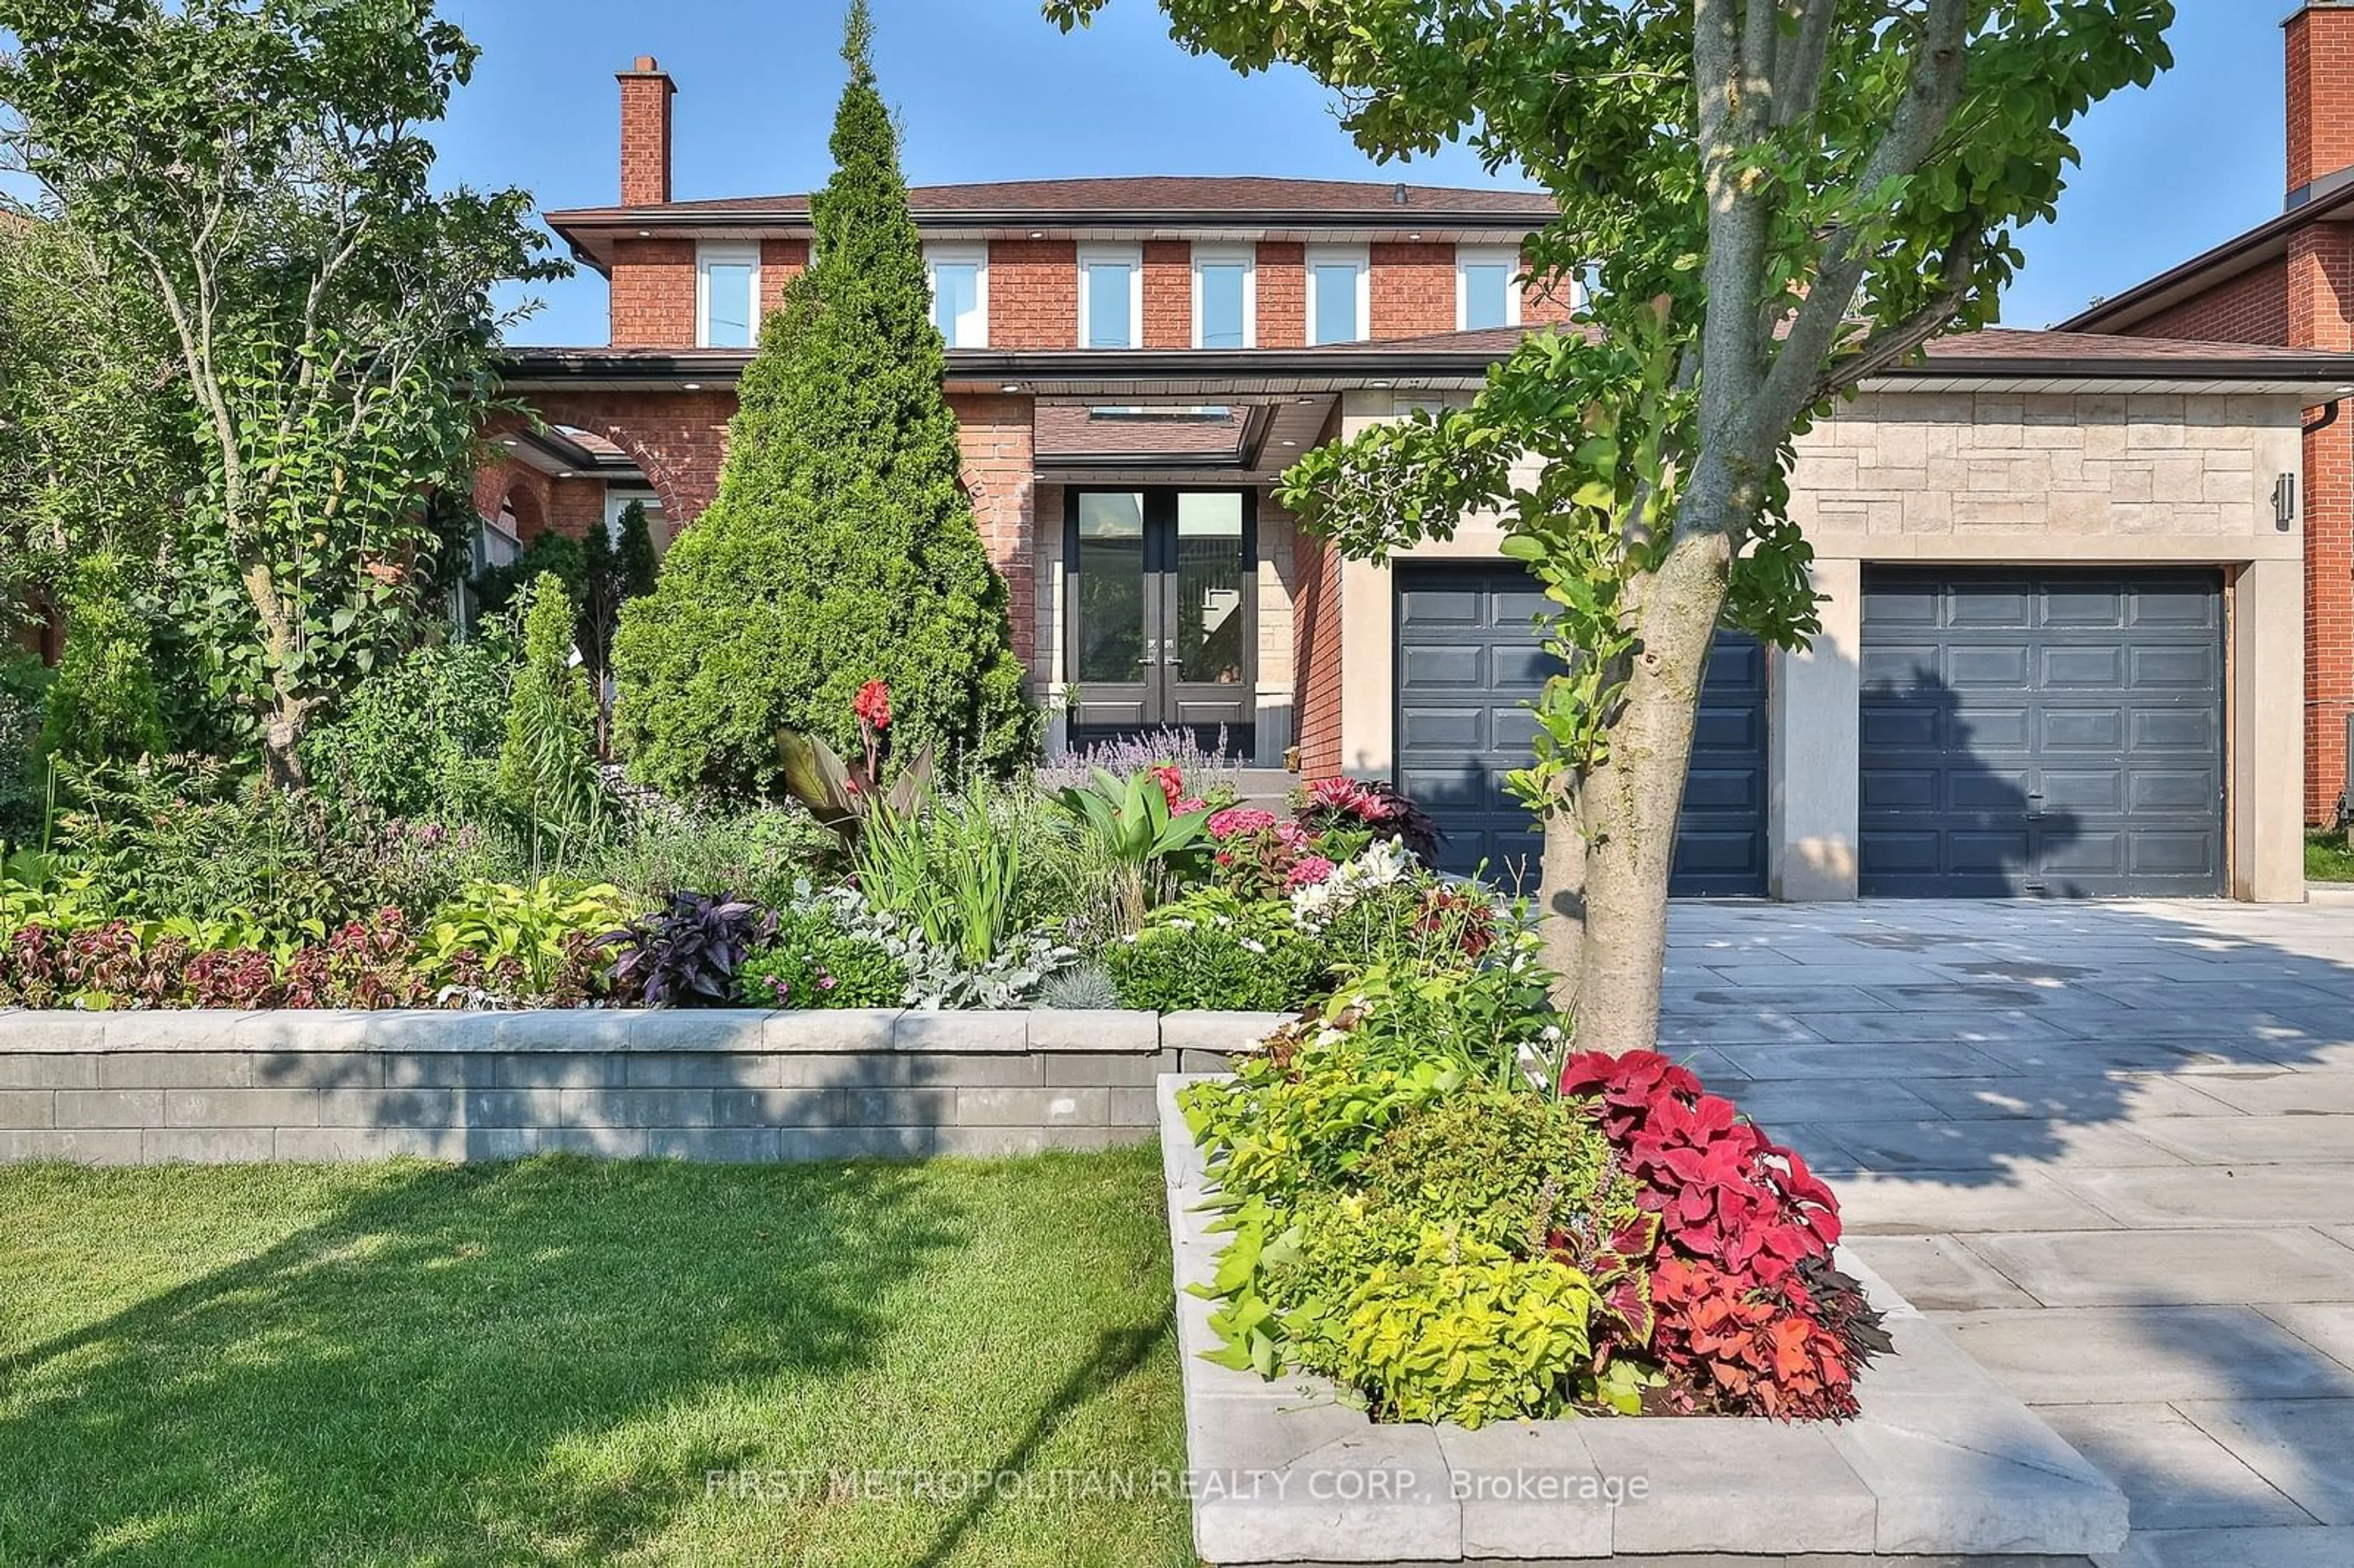 Home with brick exterior material for 395 Morrish Rd, Toronto Ontario M1C 1E9